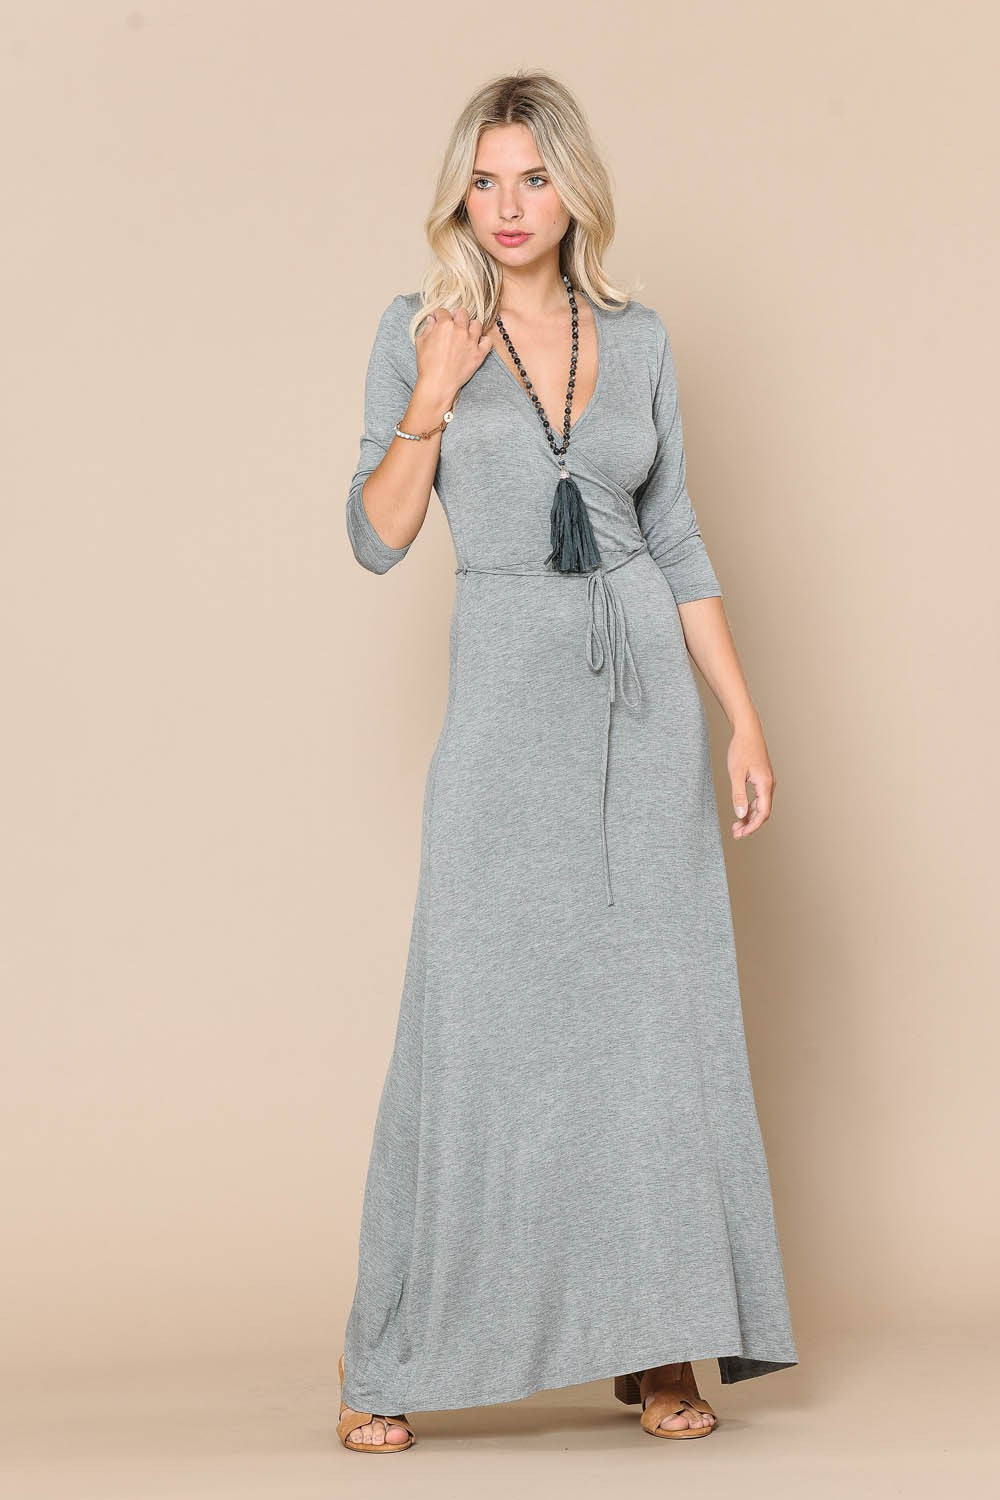 Heather Grey Quarter Sleeve Maxi Dress 2/9/24 8022